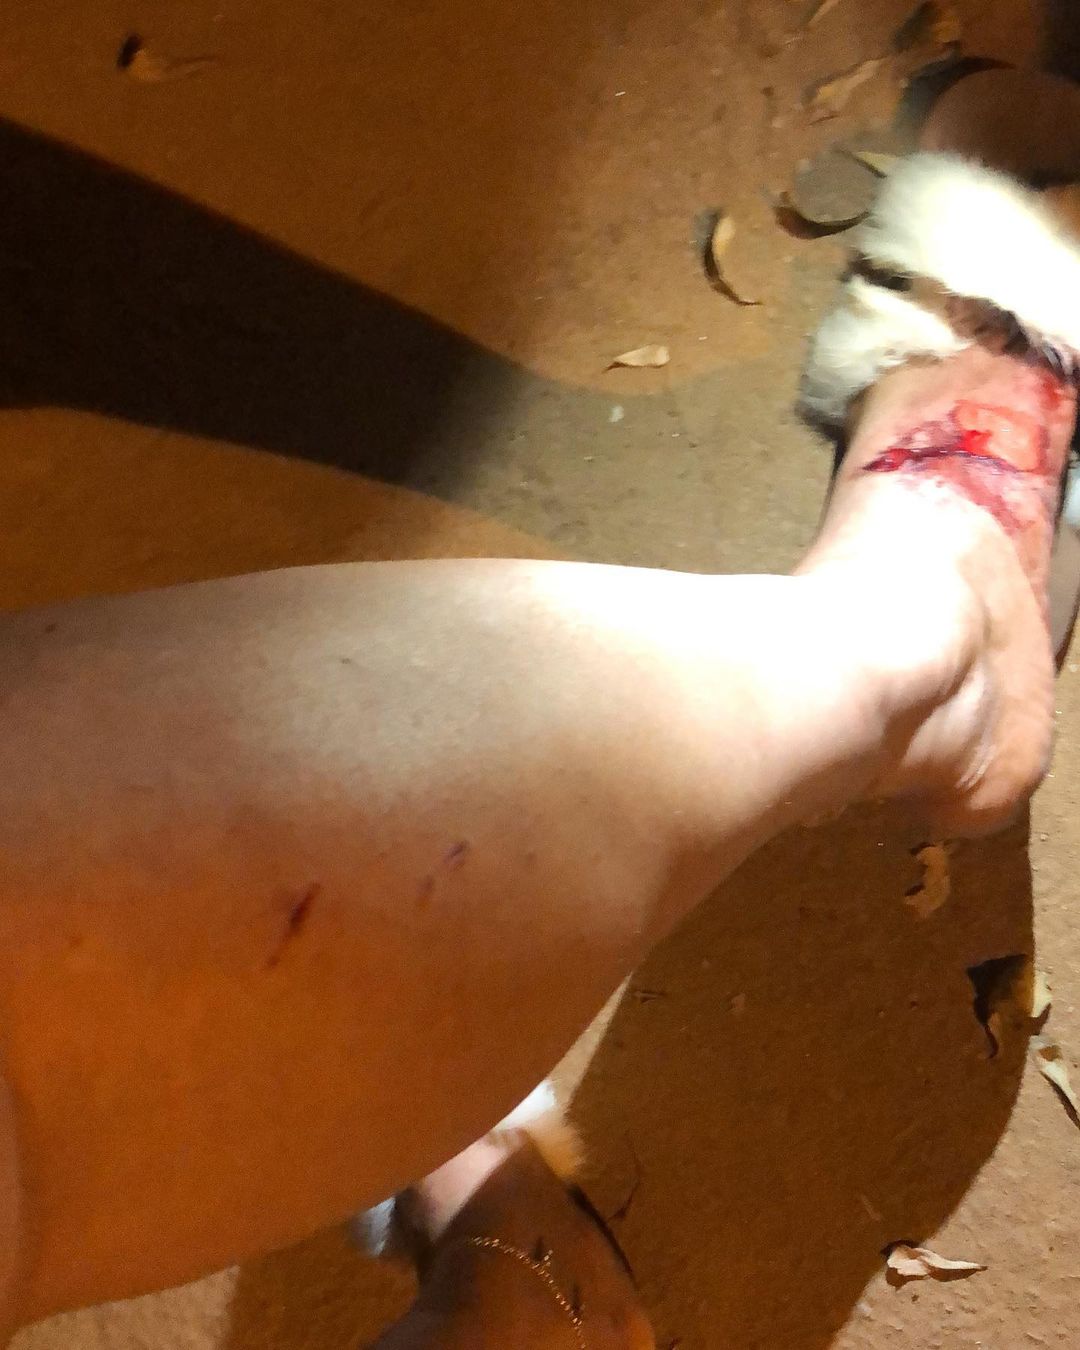 Chikwendu with a bleeding leg